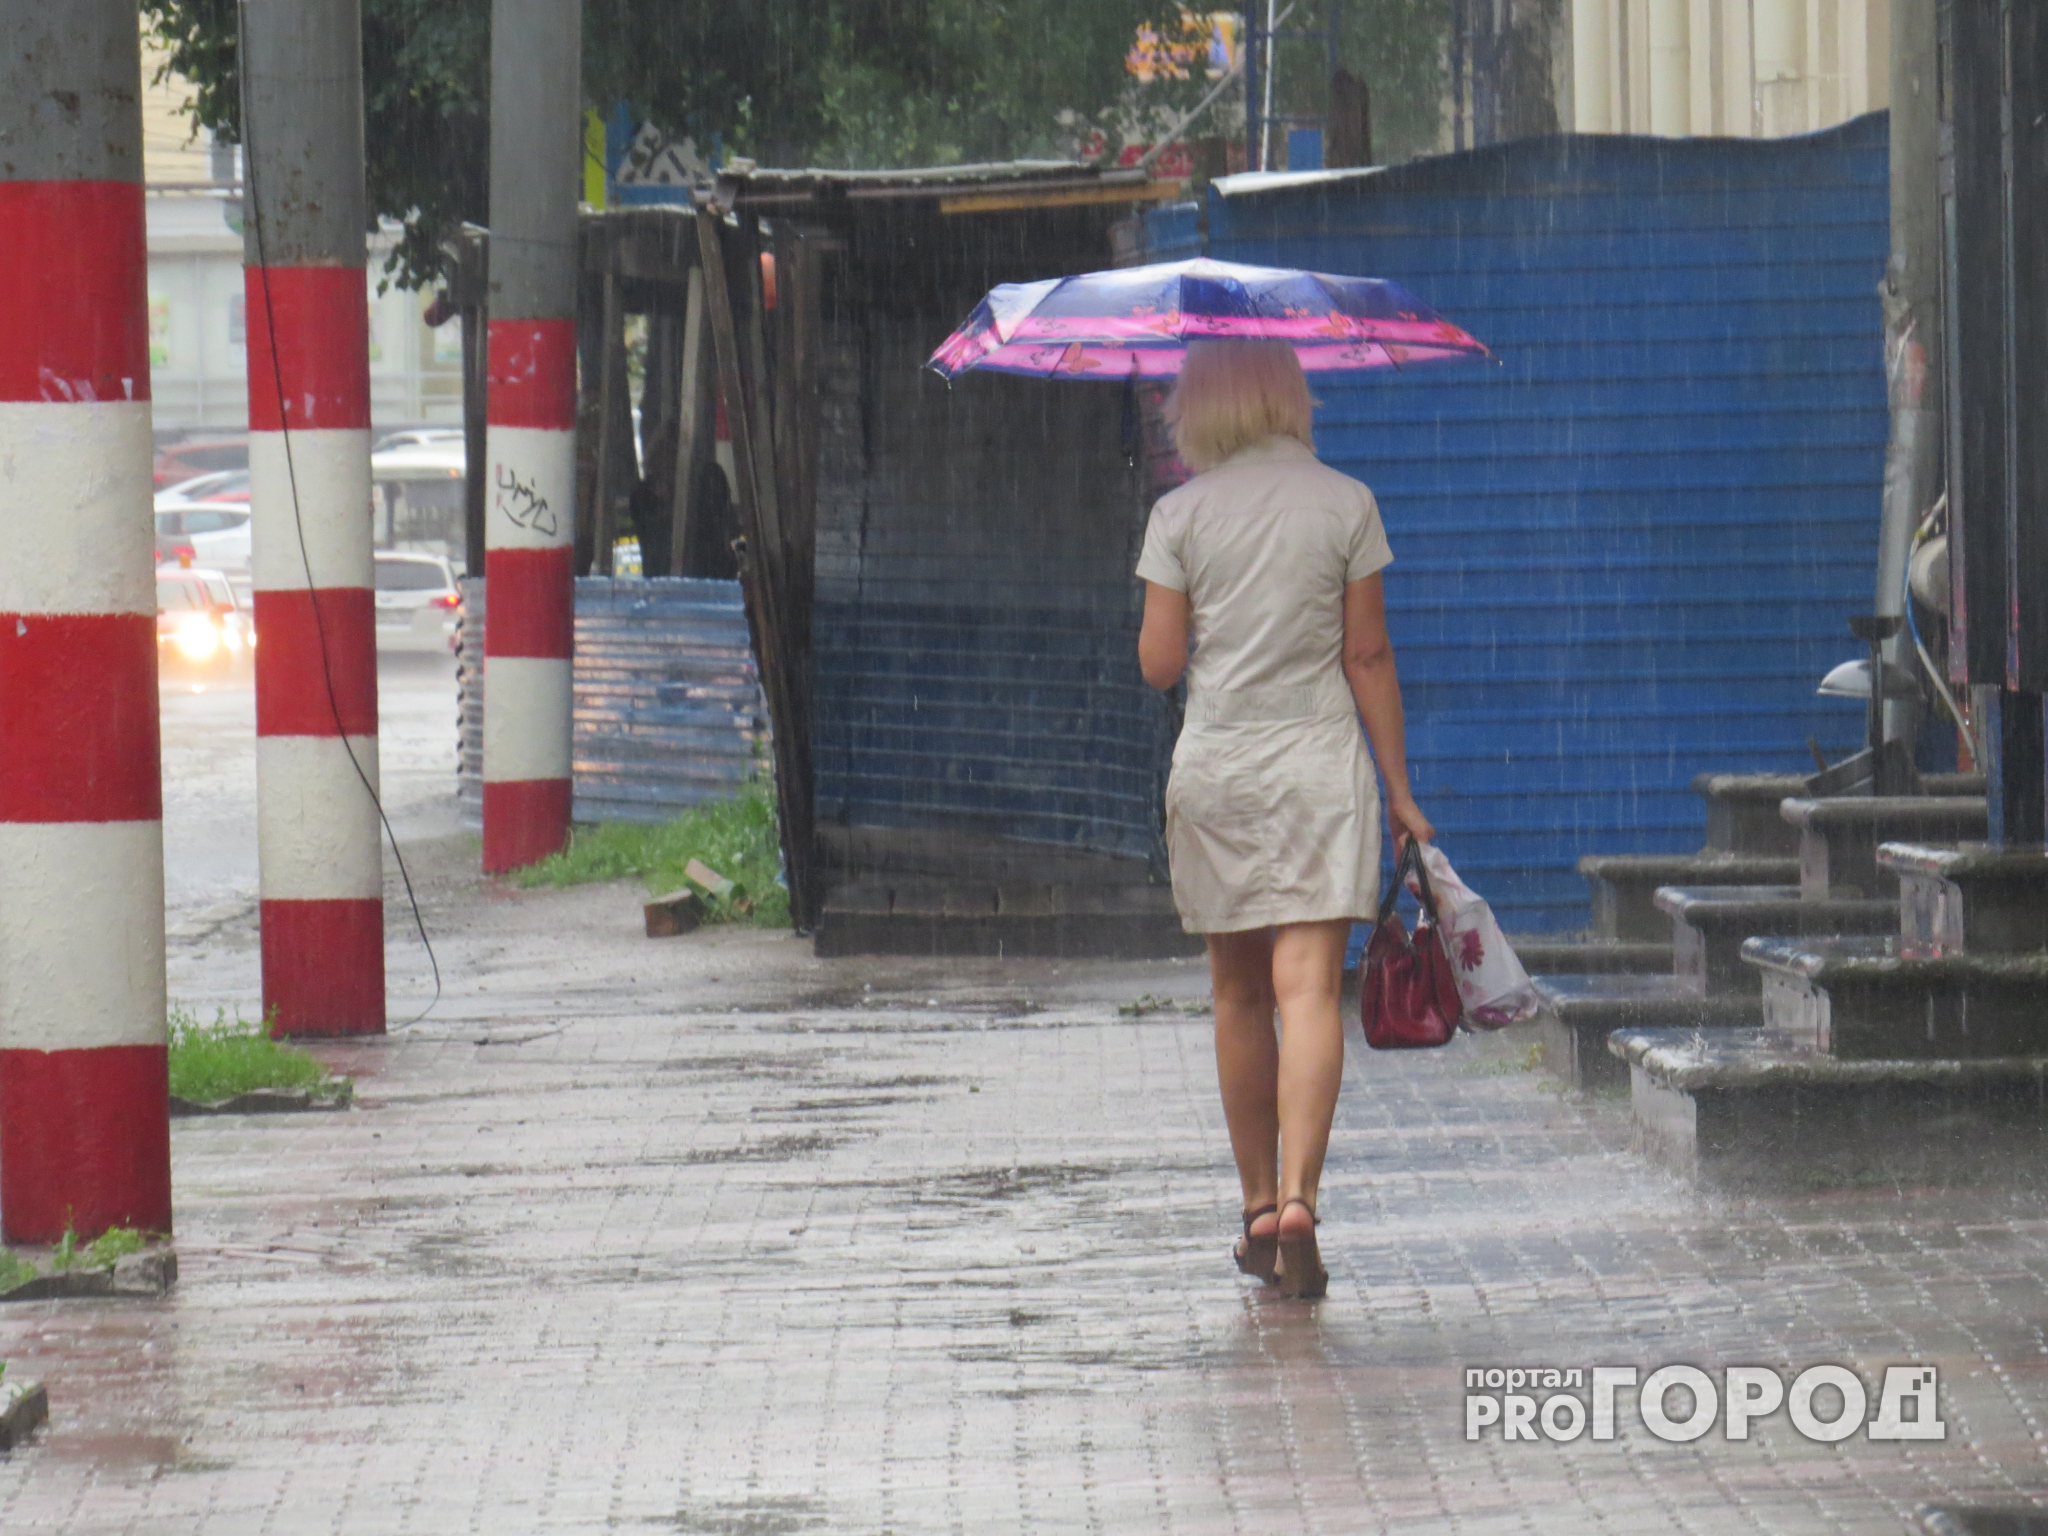 Метеорологи советуют ярославцам захватить зонтики: днем возможен дождь